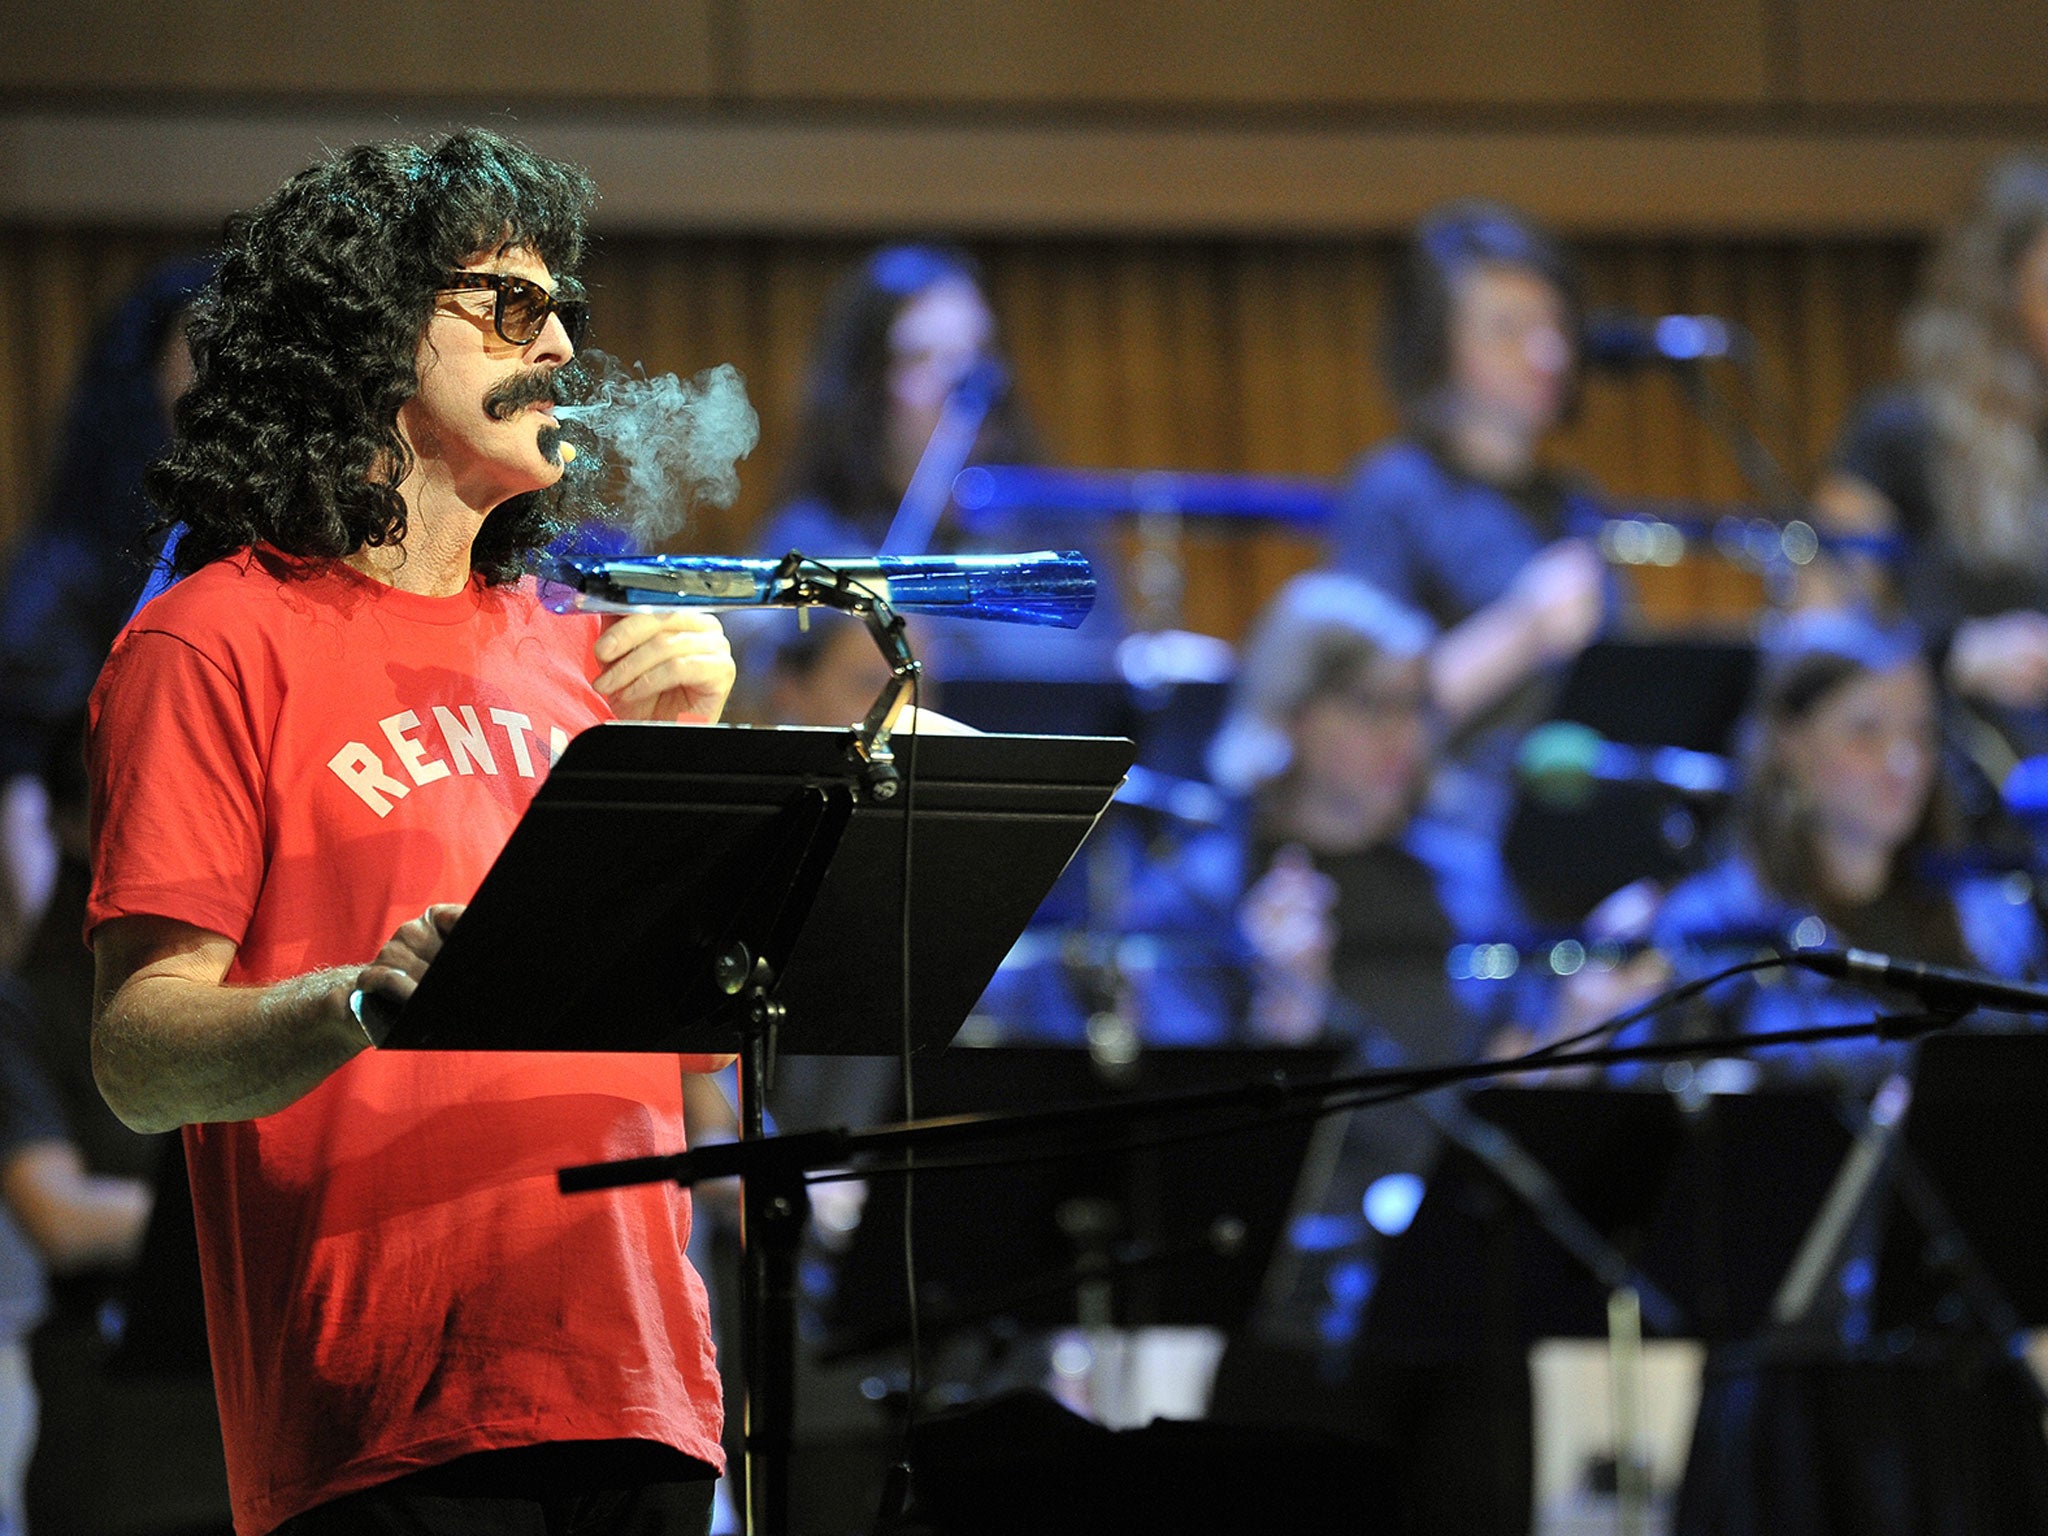 Frank Zappa's 200 Motels at London's Royal Festival Hall